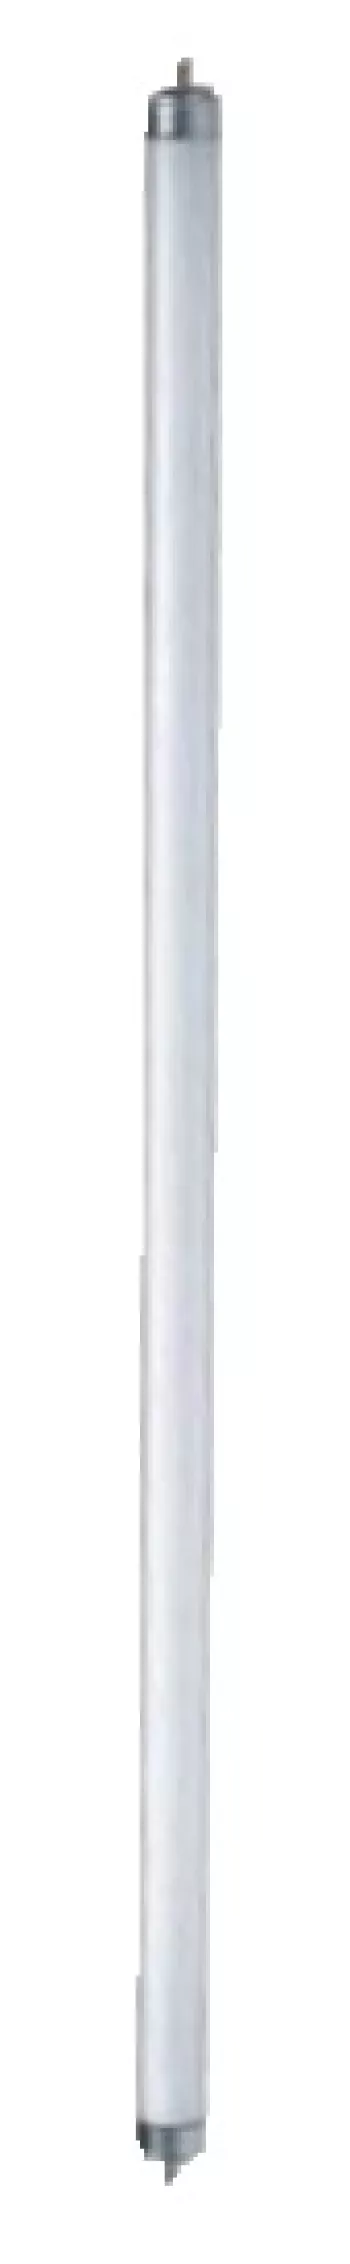 Marbel  лампа T5/Energiespar-LM 21W 3000K 2100lm